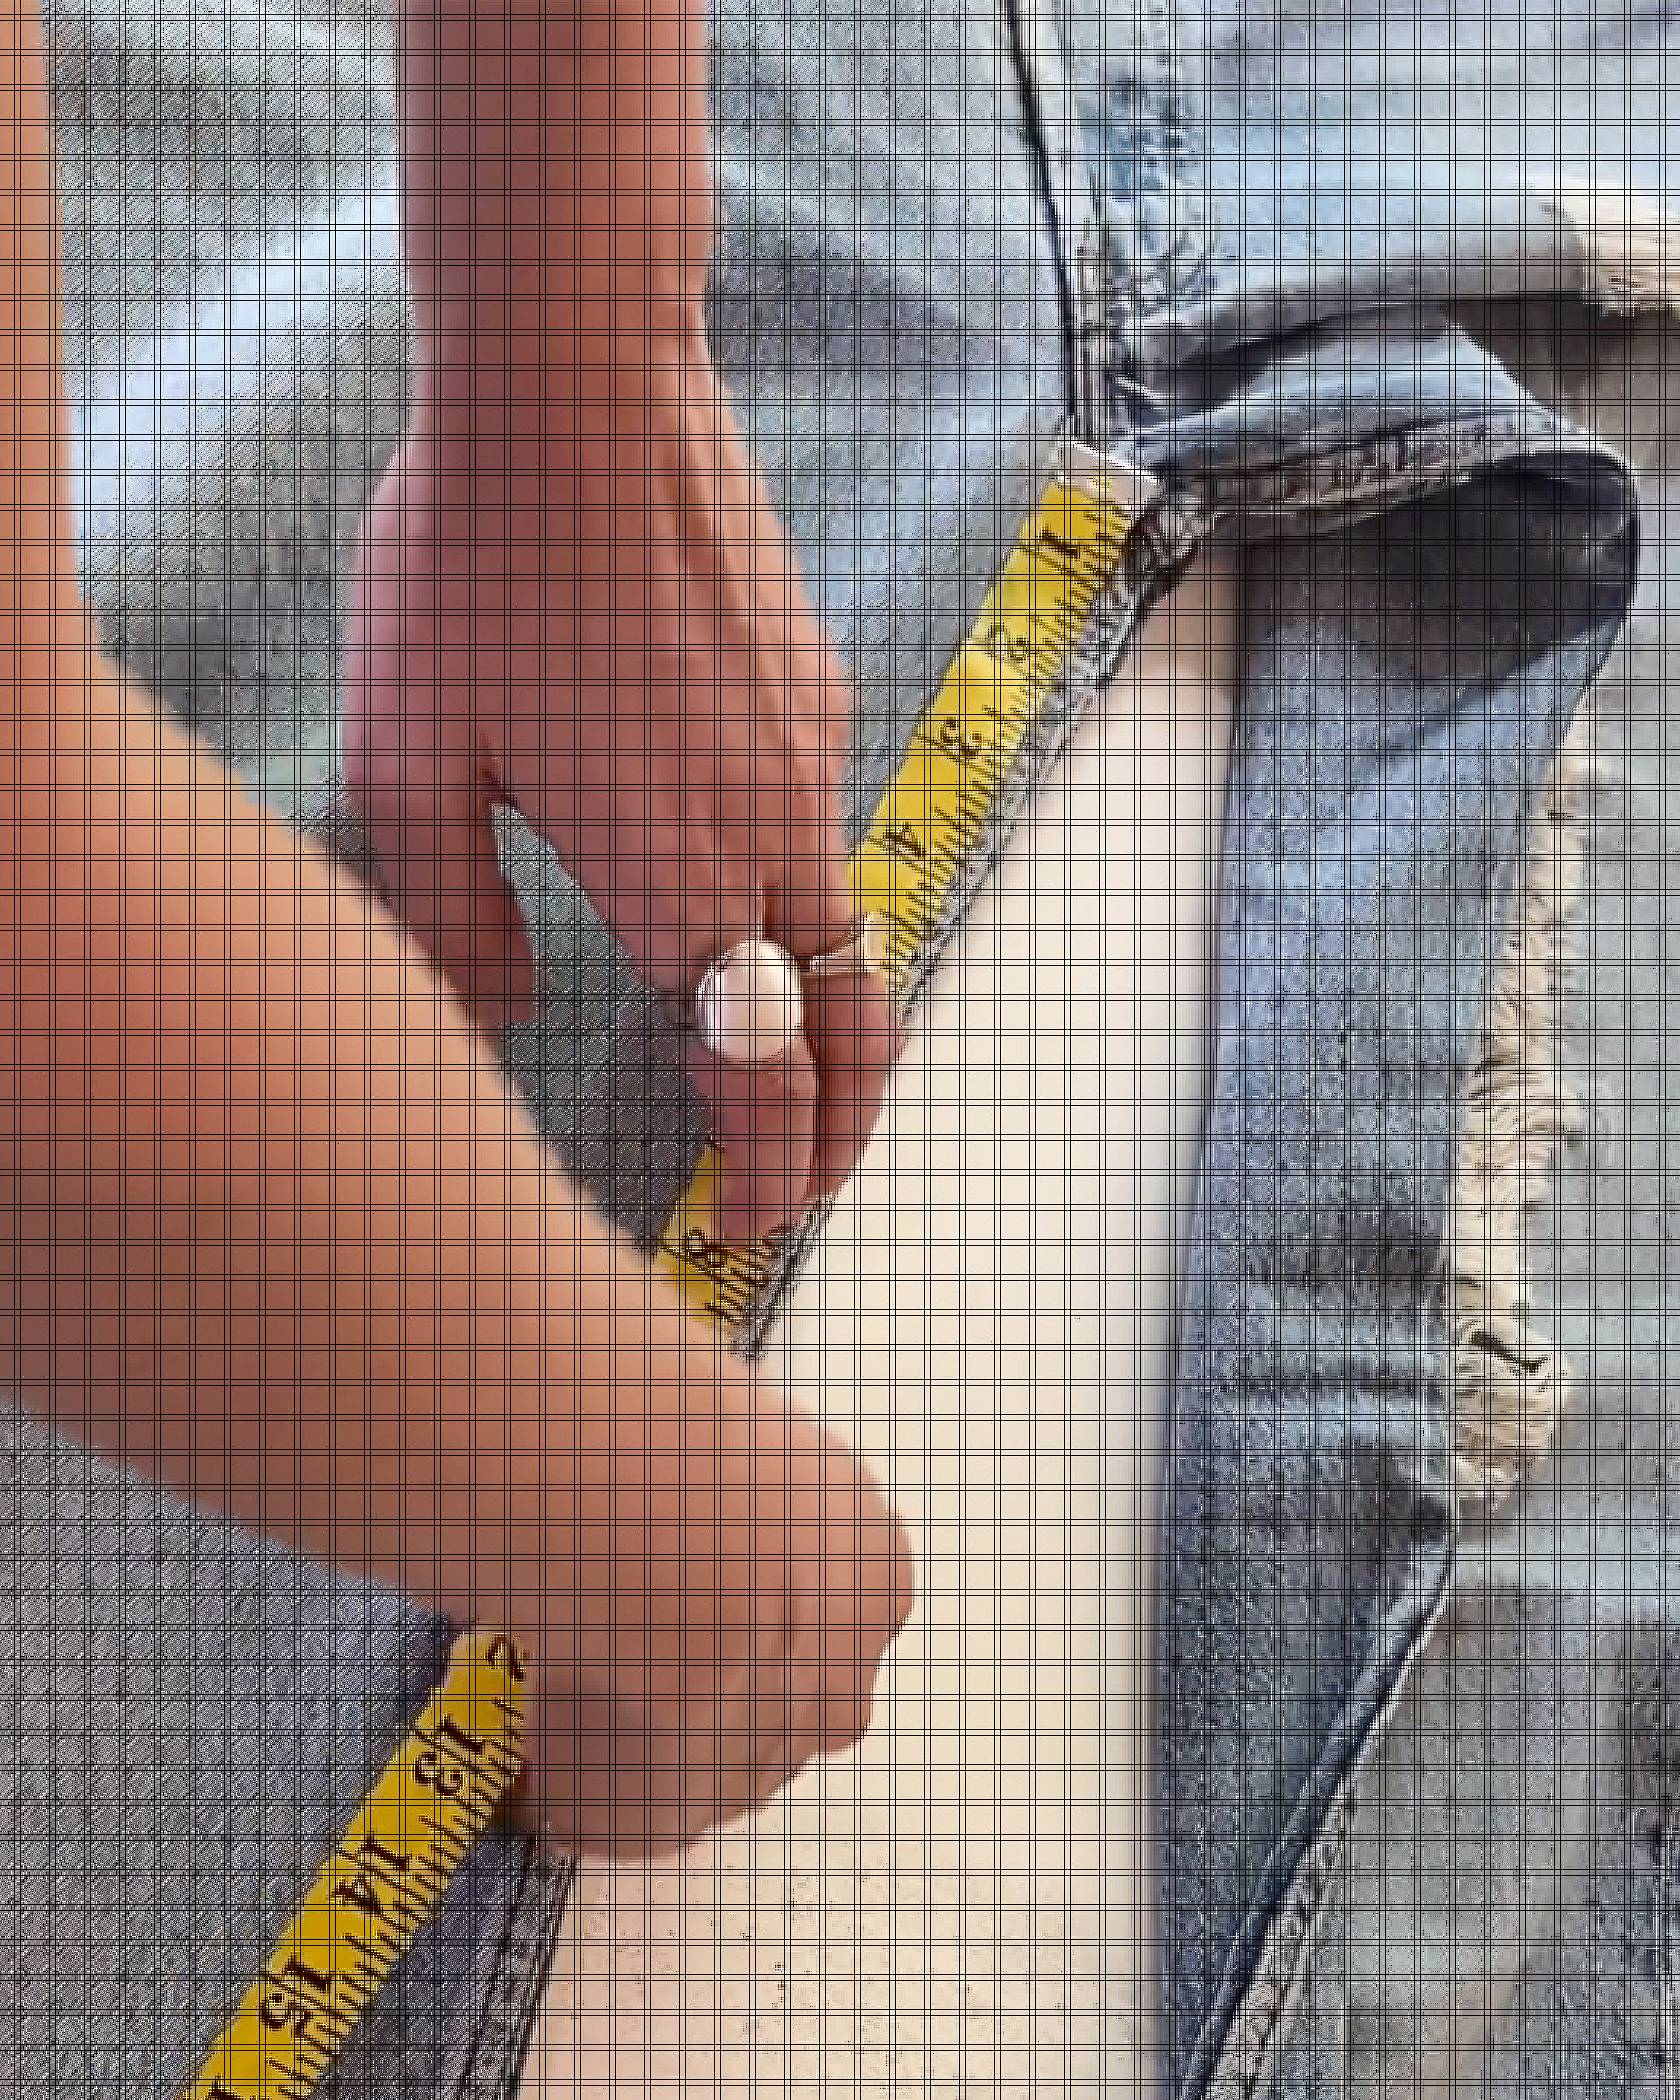 tape measure measuring inseam of blue jeans